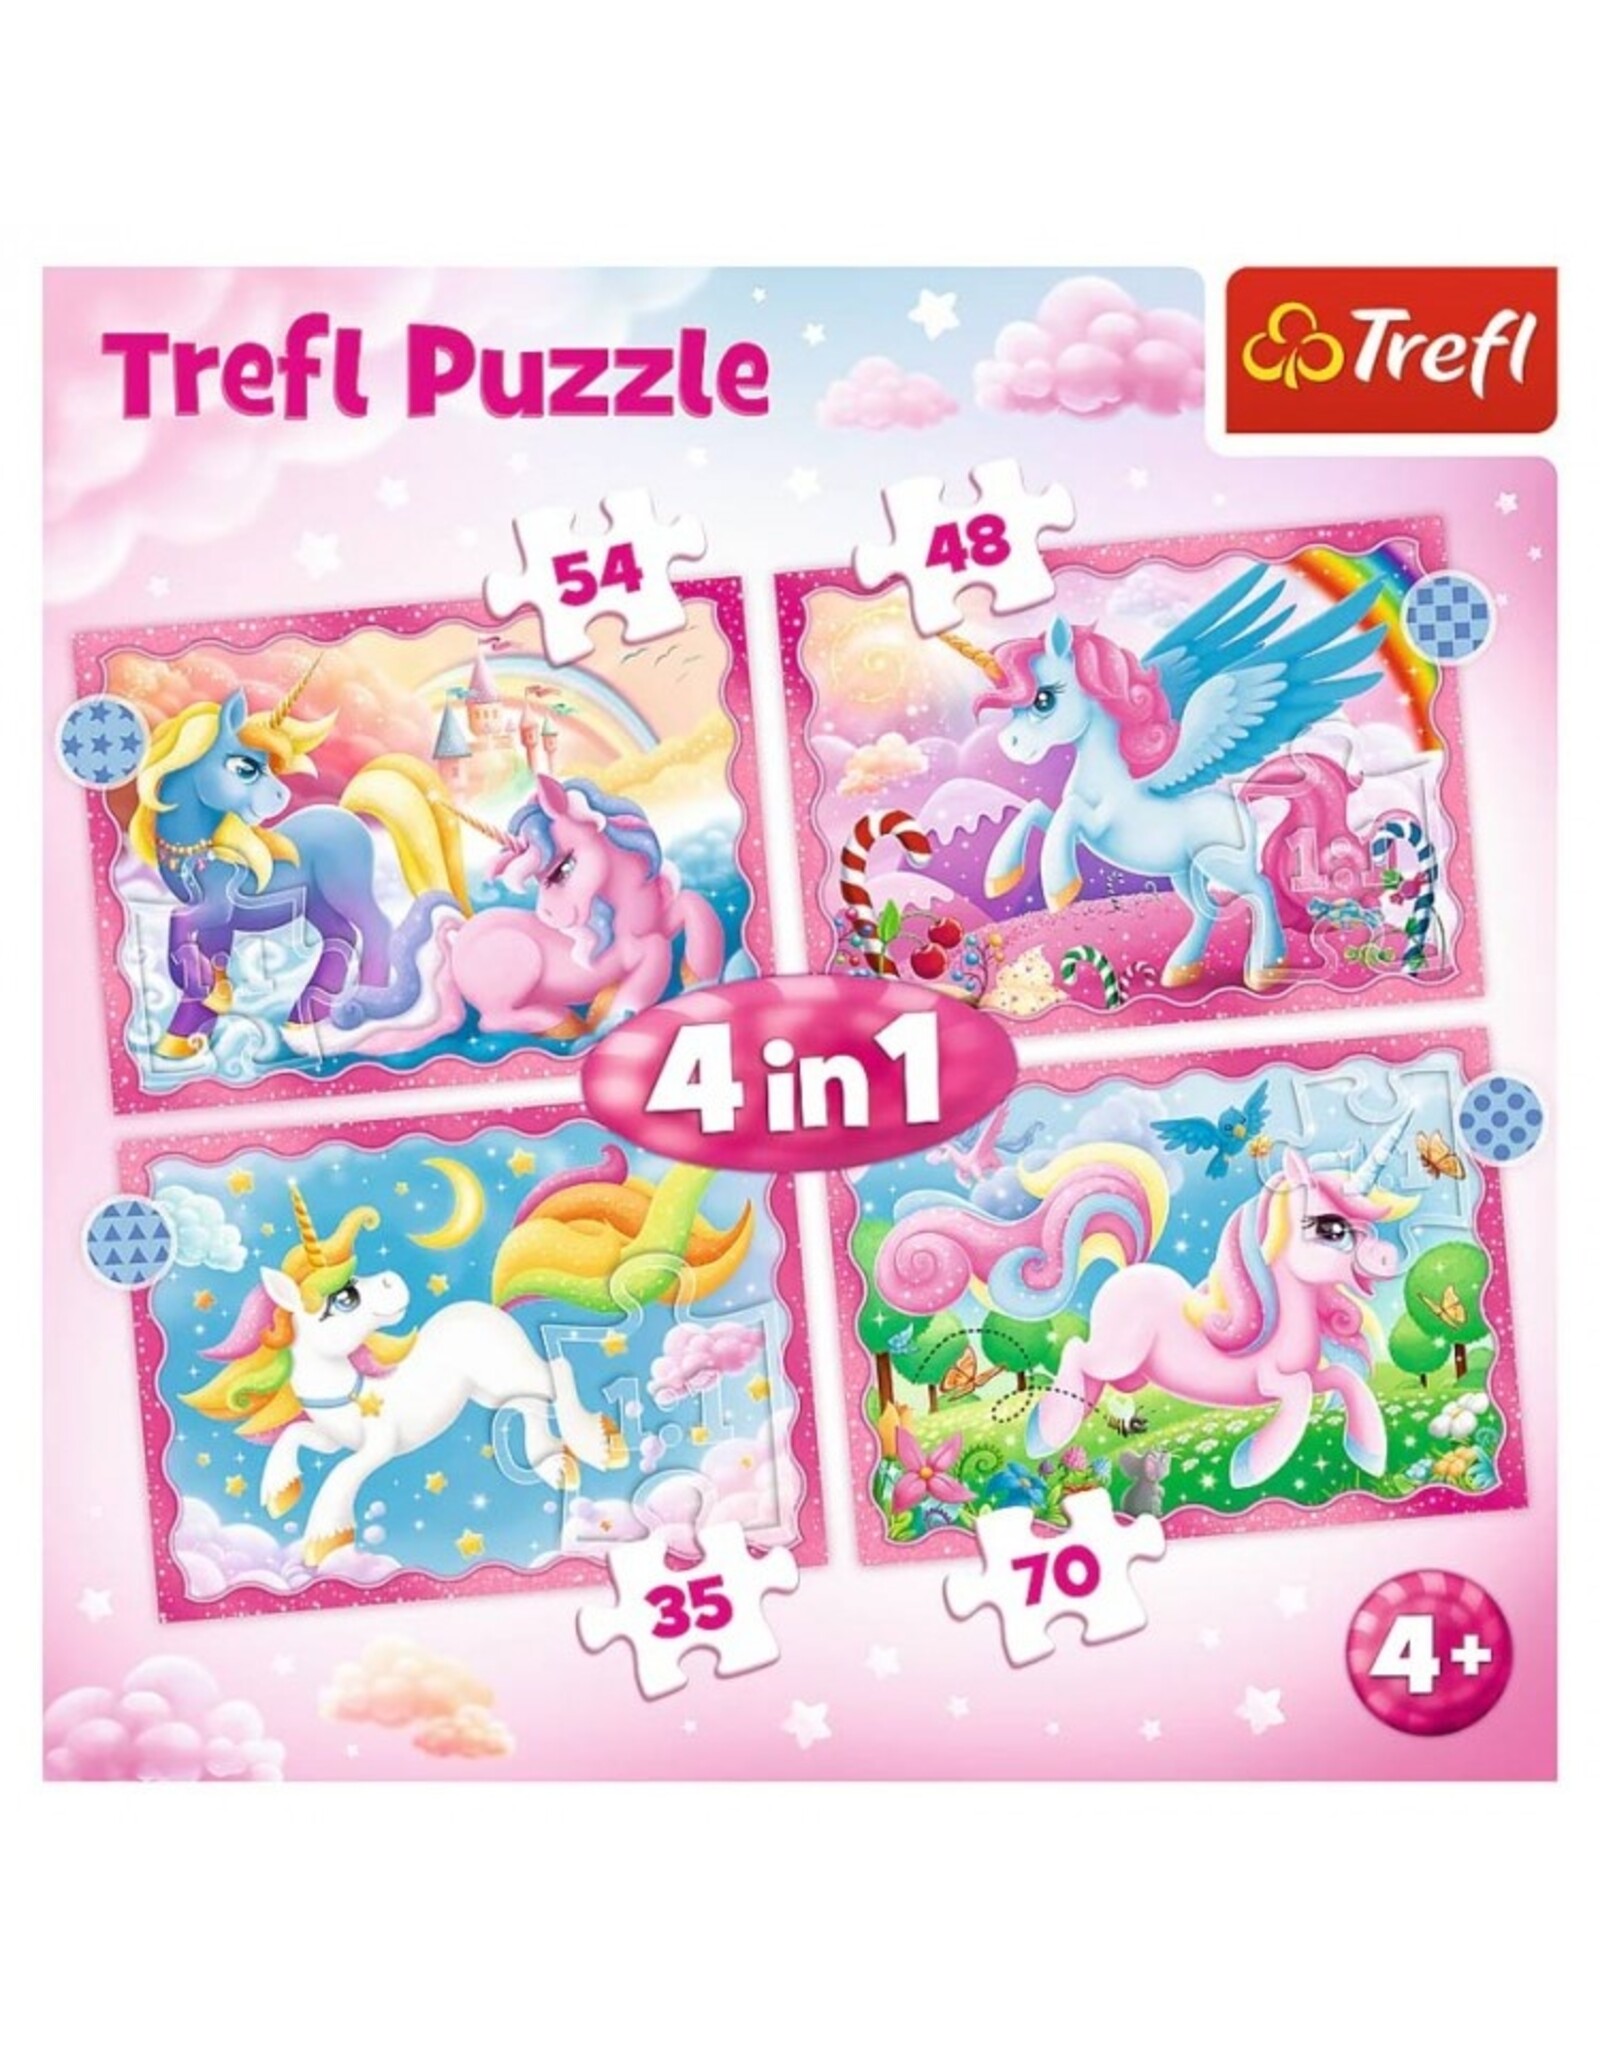 Trefl Puzzle: Unicorns and Magic 4 in 1